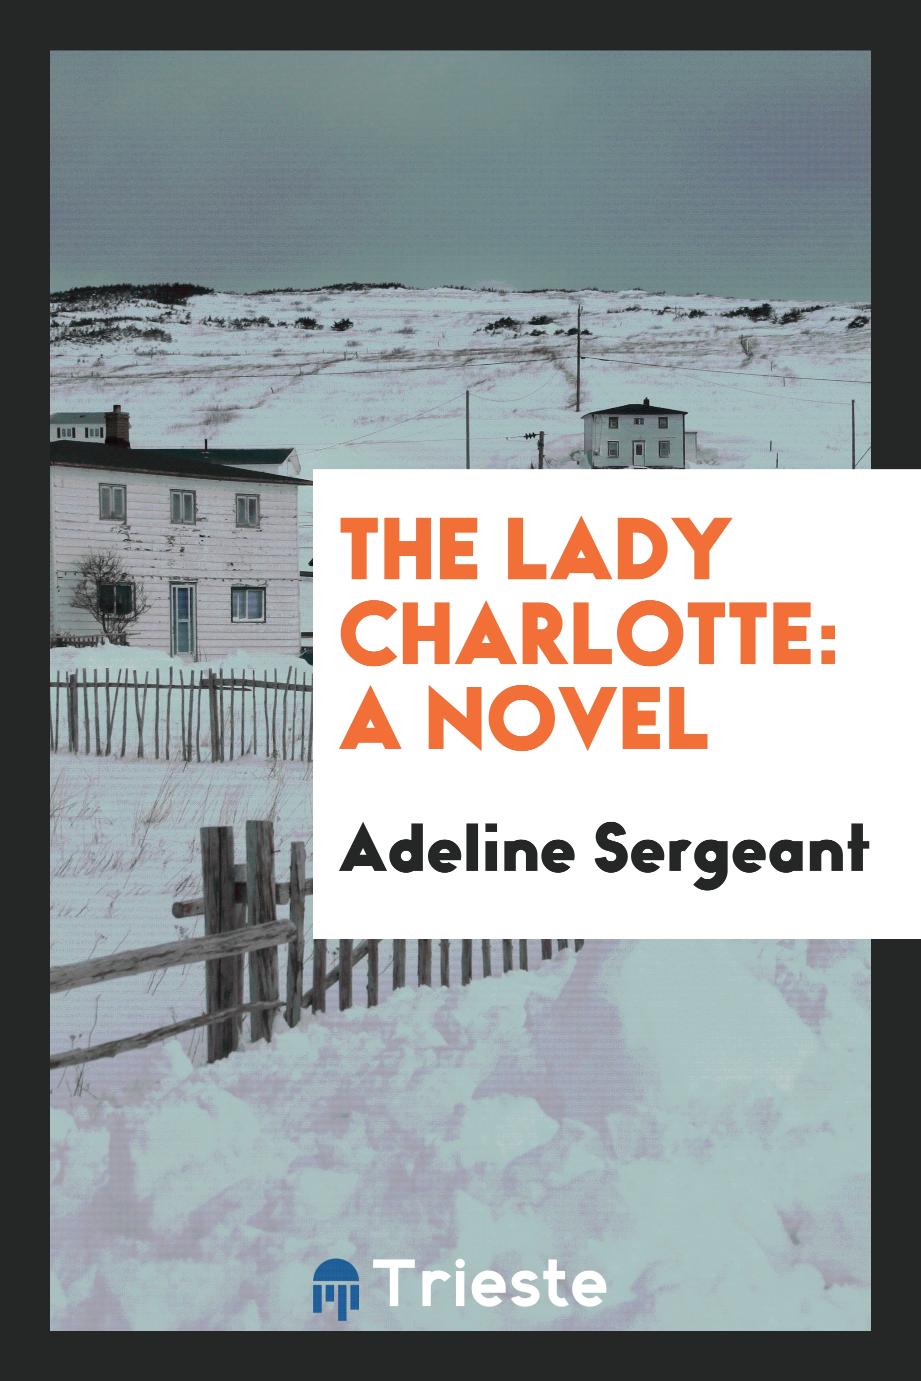 The Lady Charlotte: a novel